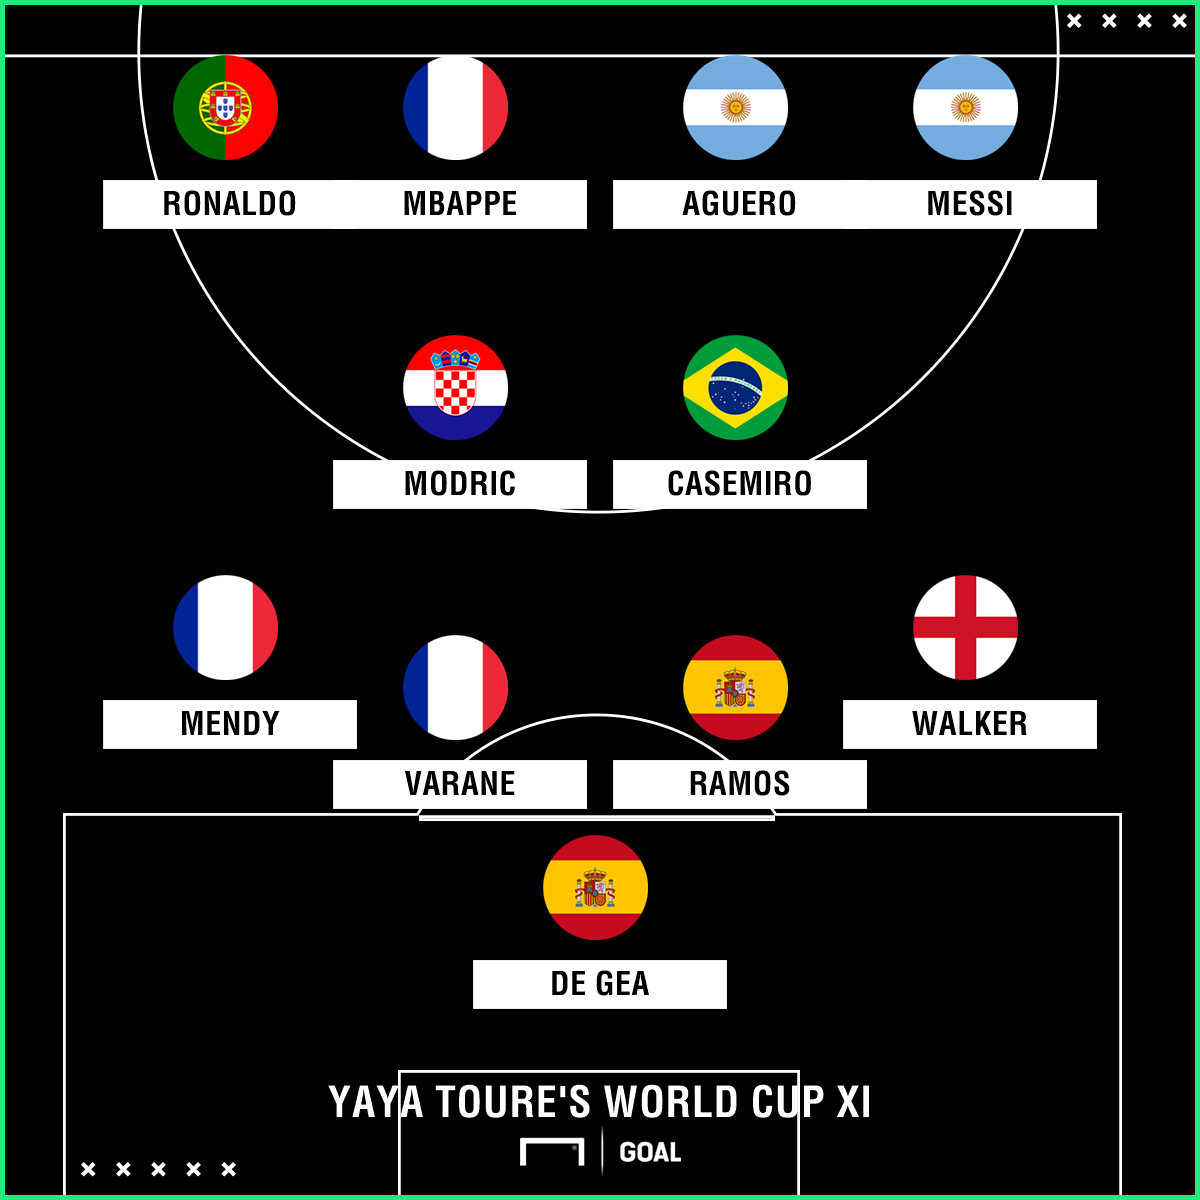 Yaya Toure's World Cup XI